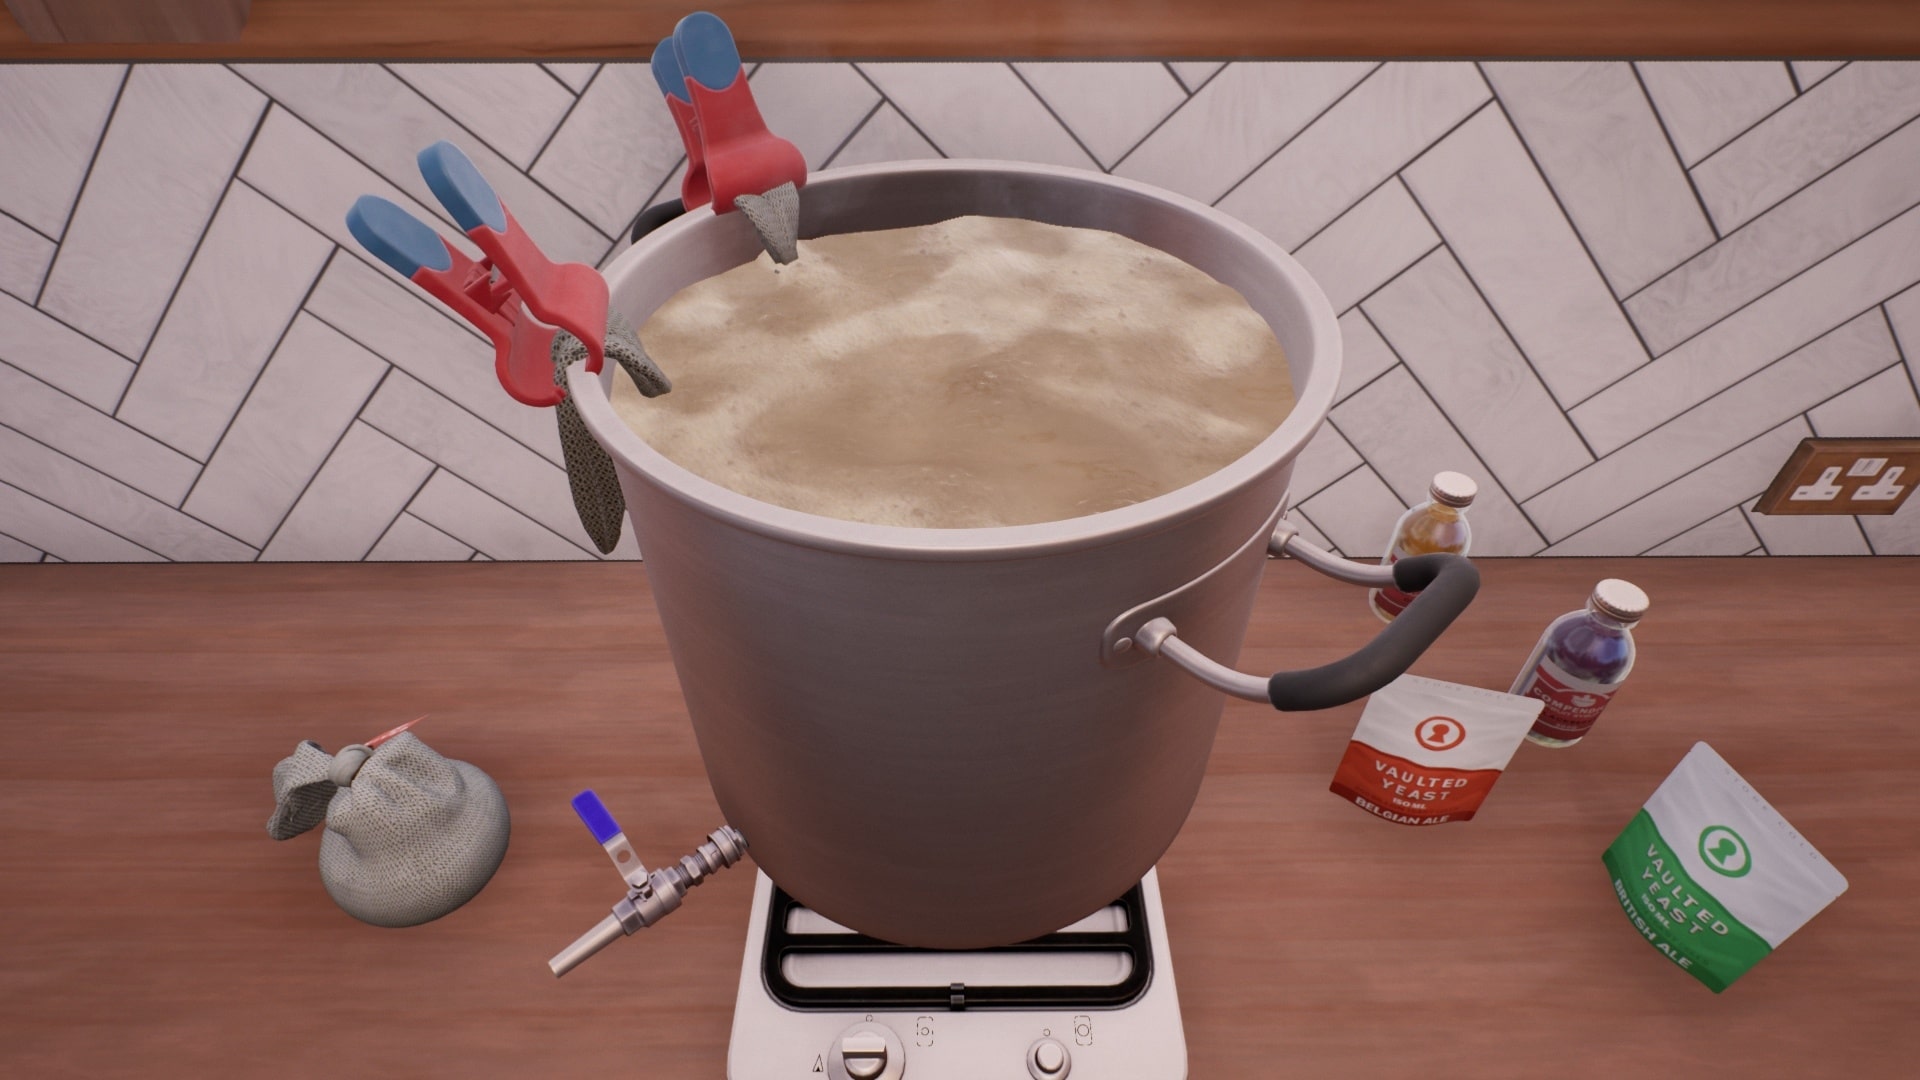 Beer simulator. Симулятор пивоварения. Brewmaster: Beer Brewing Simulator Simulator. Brewmaster Beer Brewing Simulator пиво. Brewmaster: Beer Brewing Simulator [Portable] (2022).